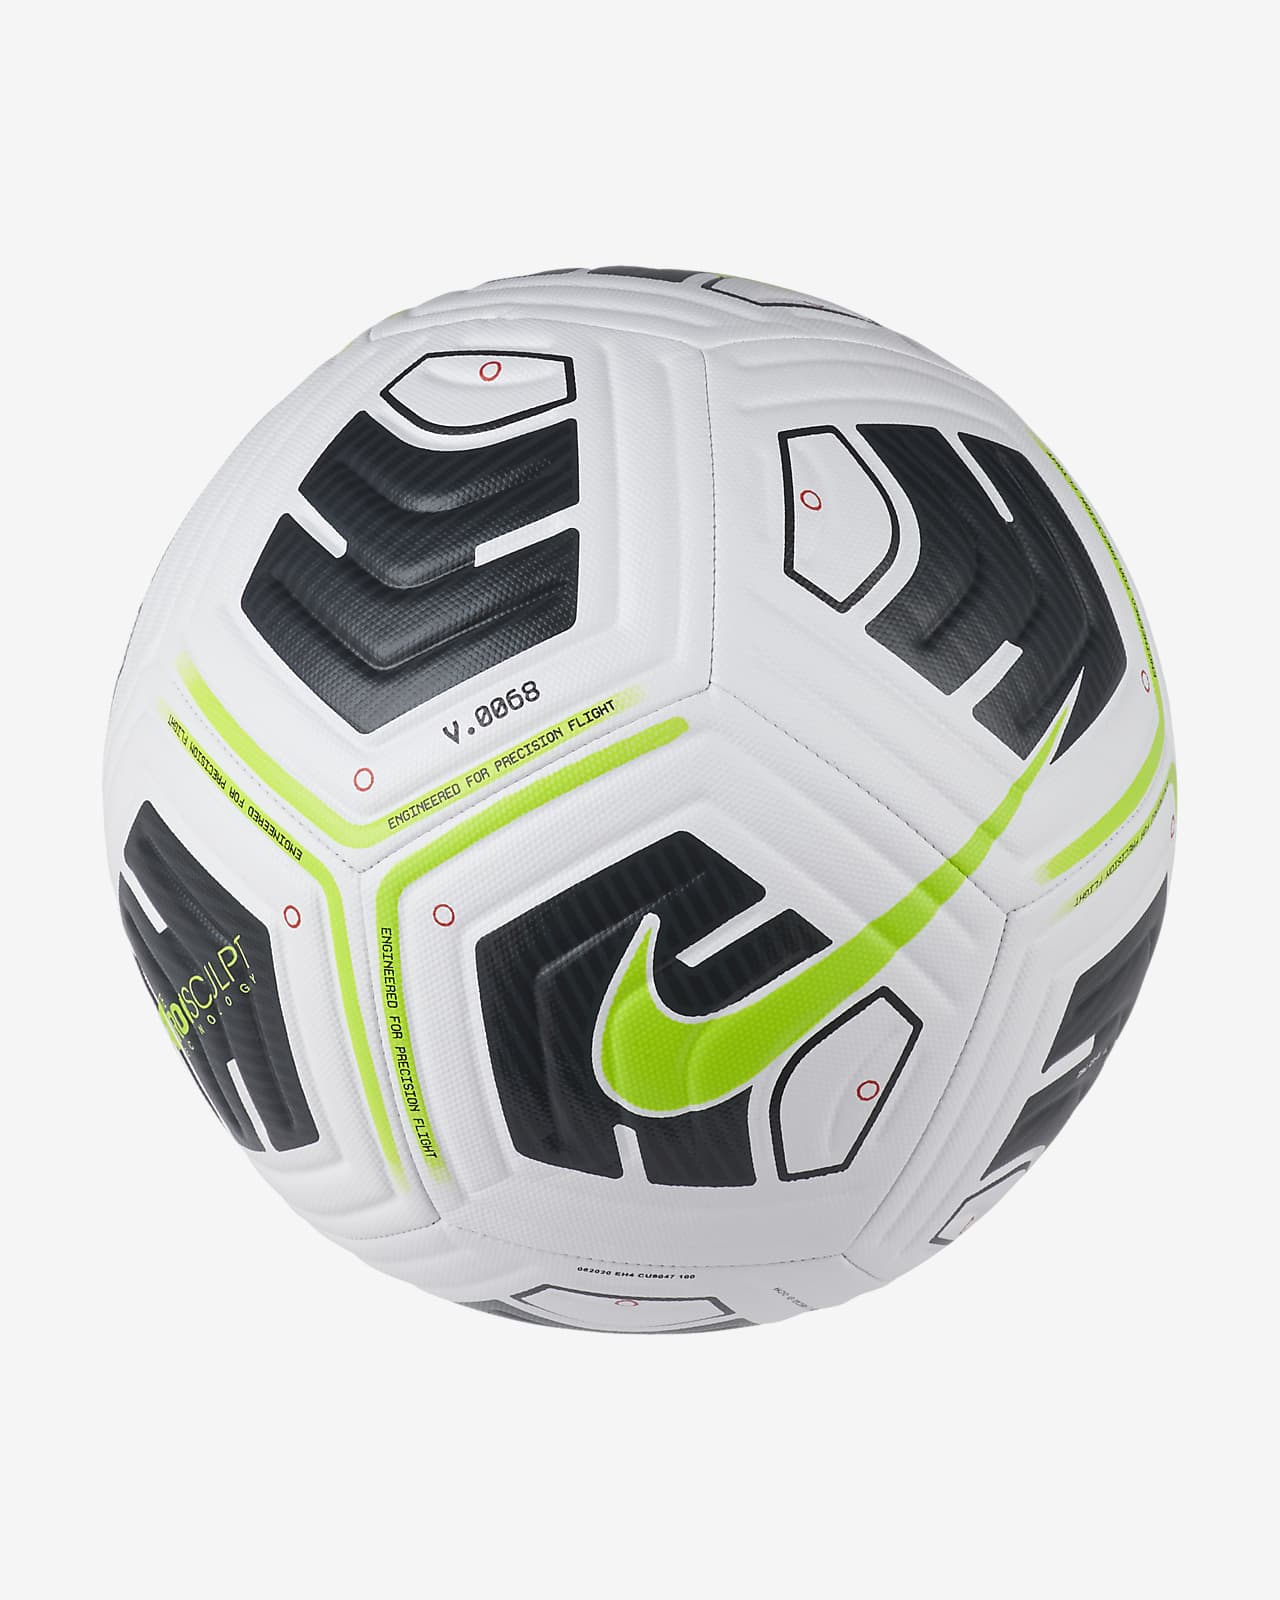 Presunto juego De acuerdo con Nike Academy Balón de fútbol. Nike ES